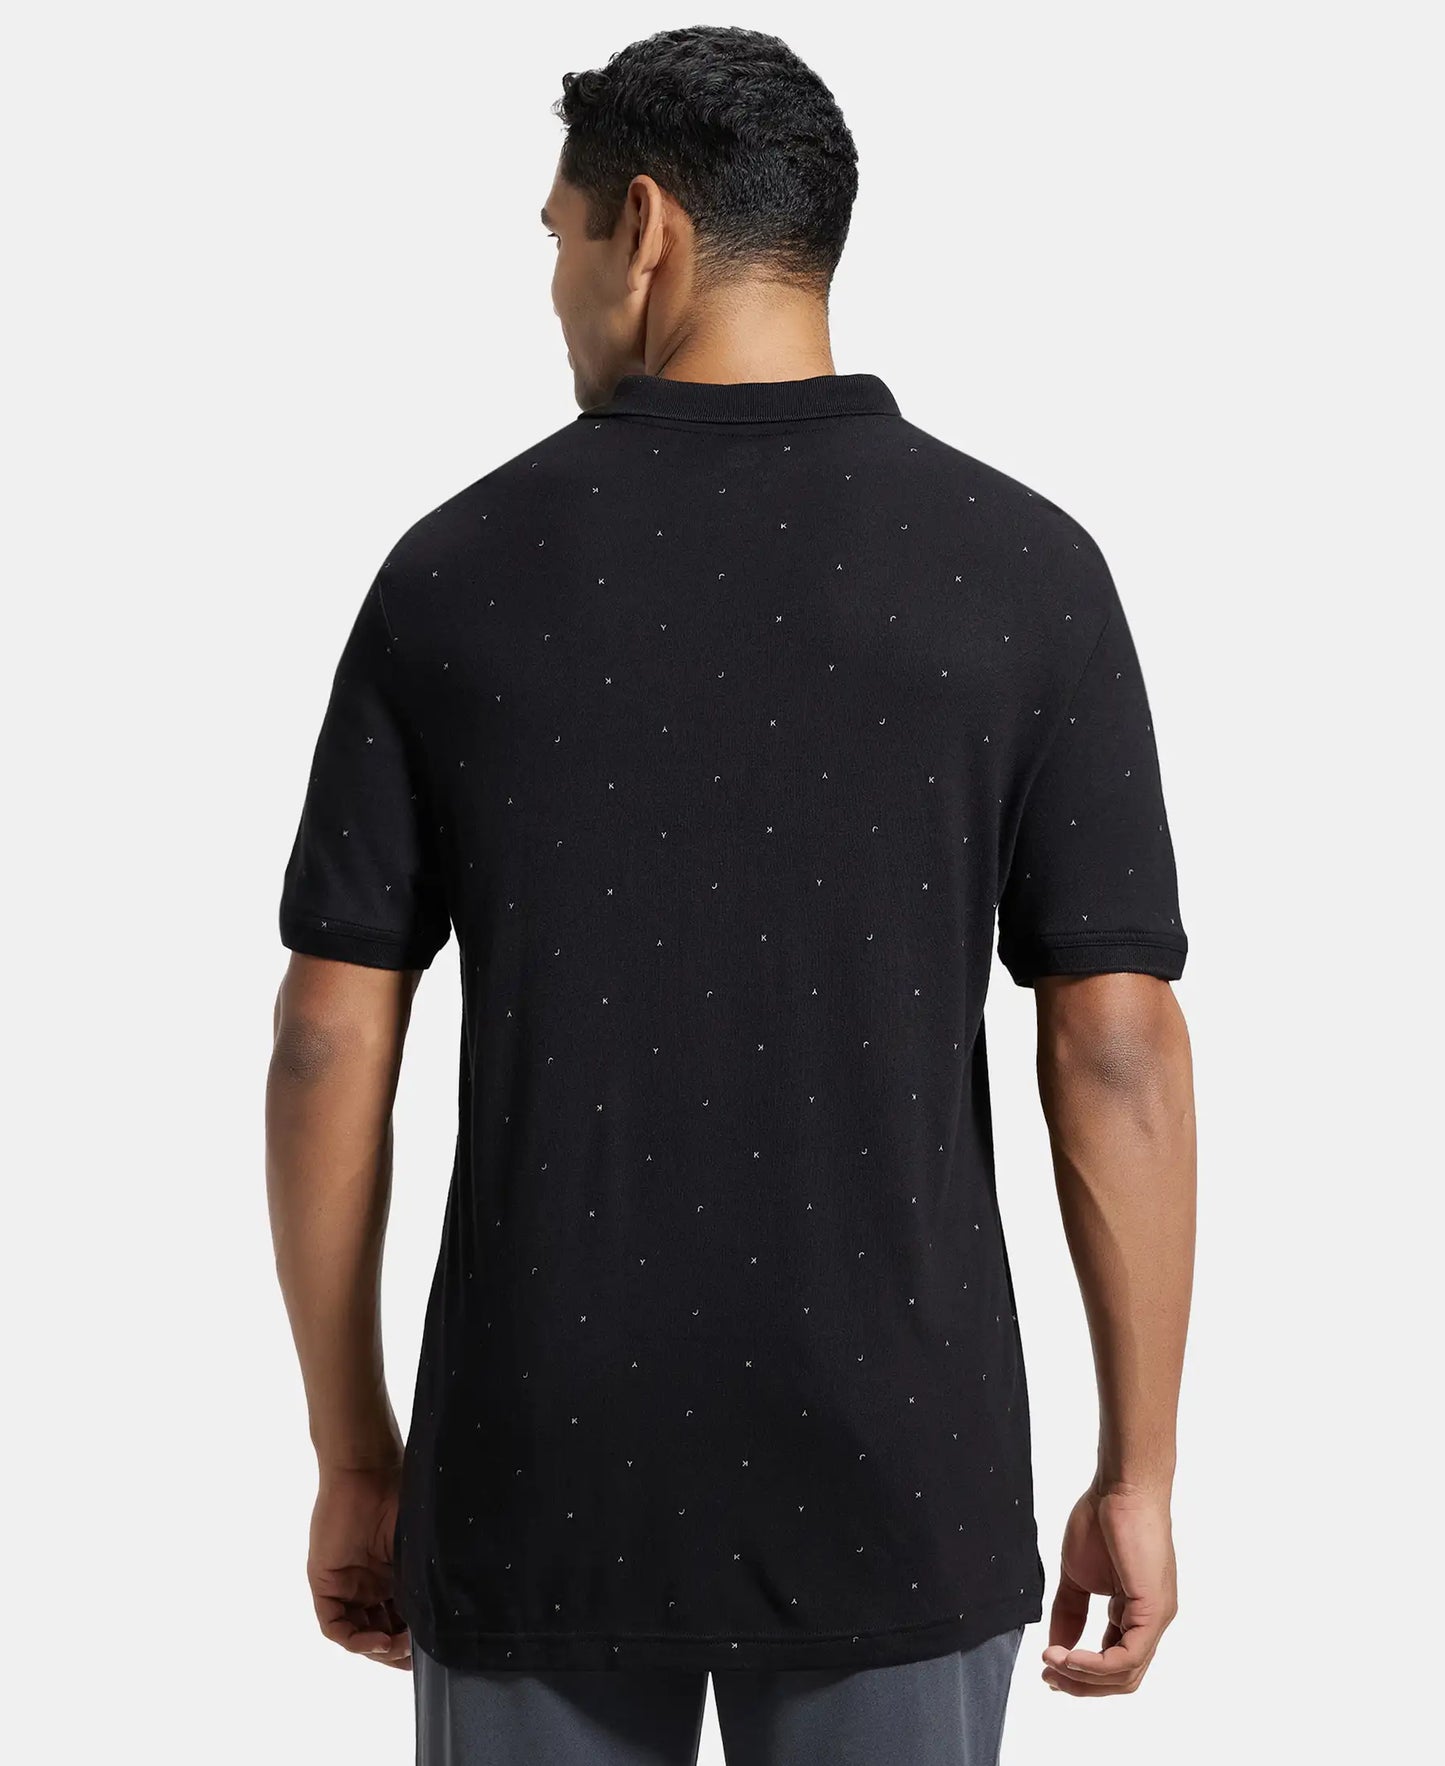 Tencel Micro Modal and Cotton Blend Printed Half Sleeve Polo T-Shirt - Black-3